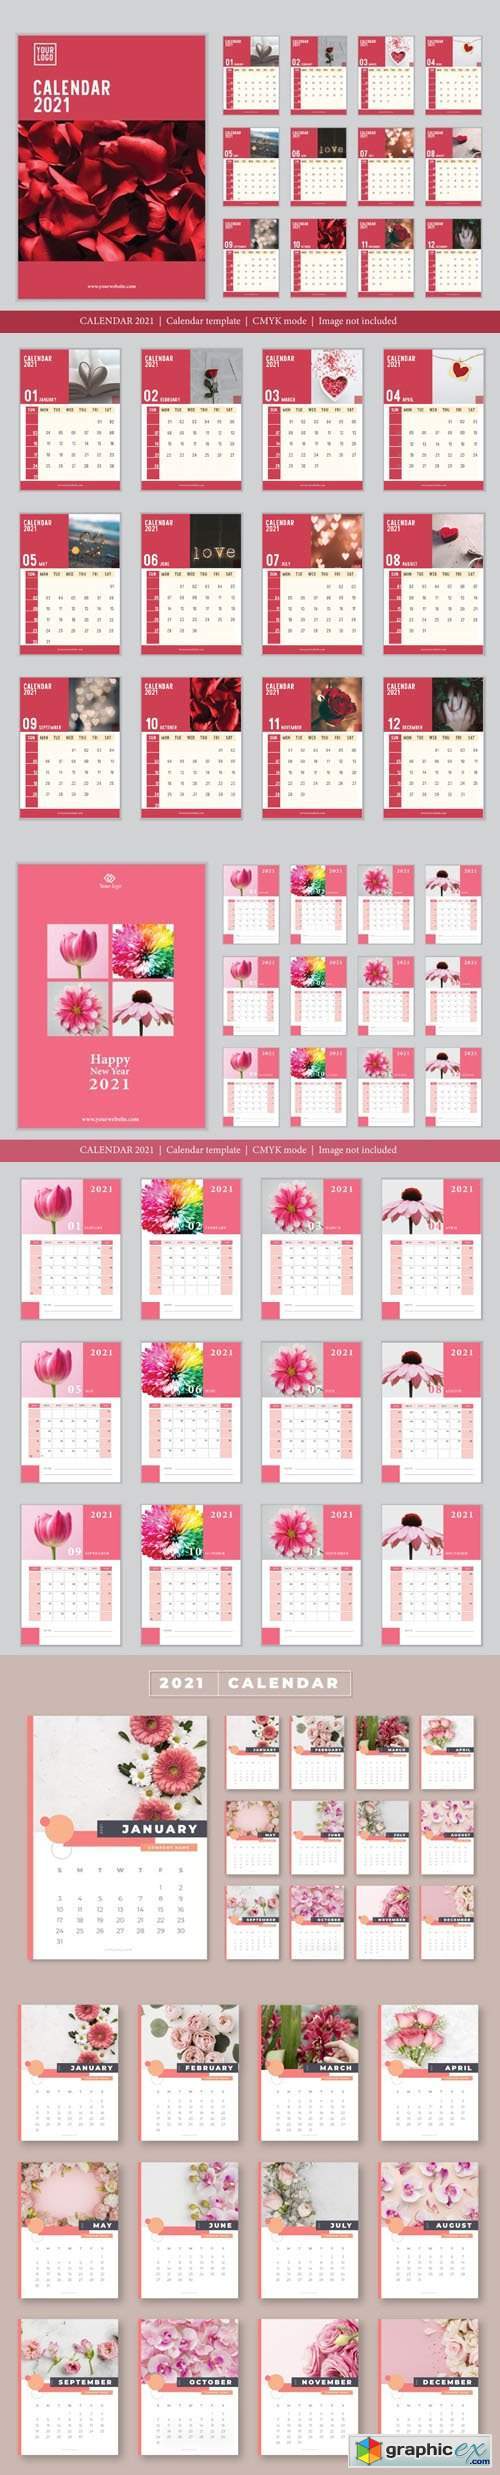 3 Vector Calendars 2021 in Romantic & Rosy Styles